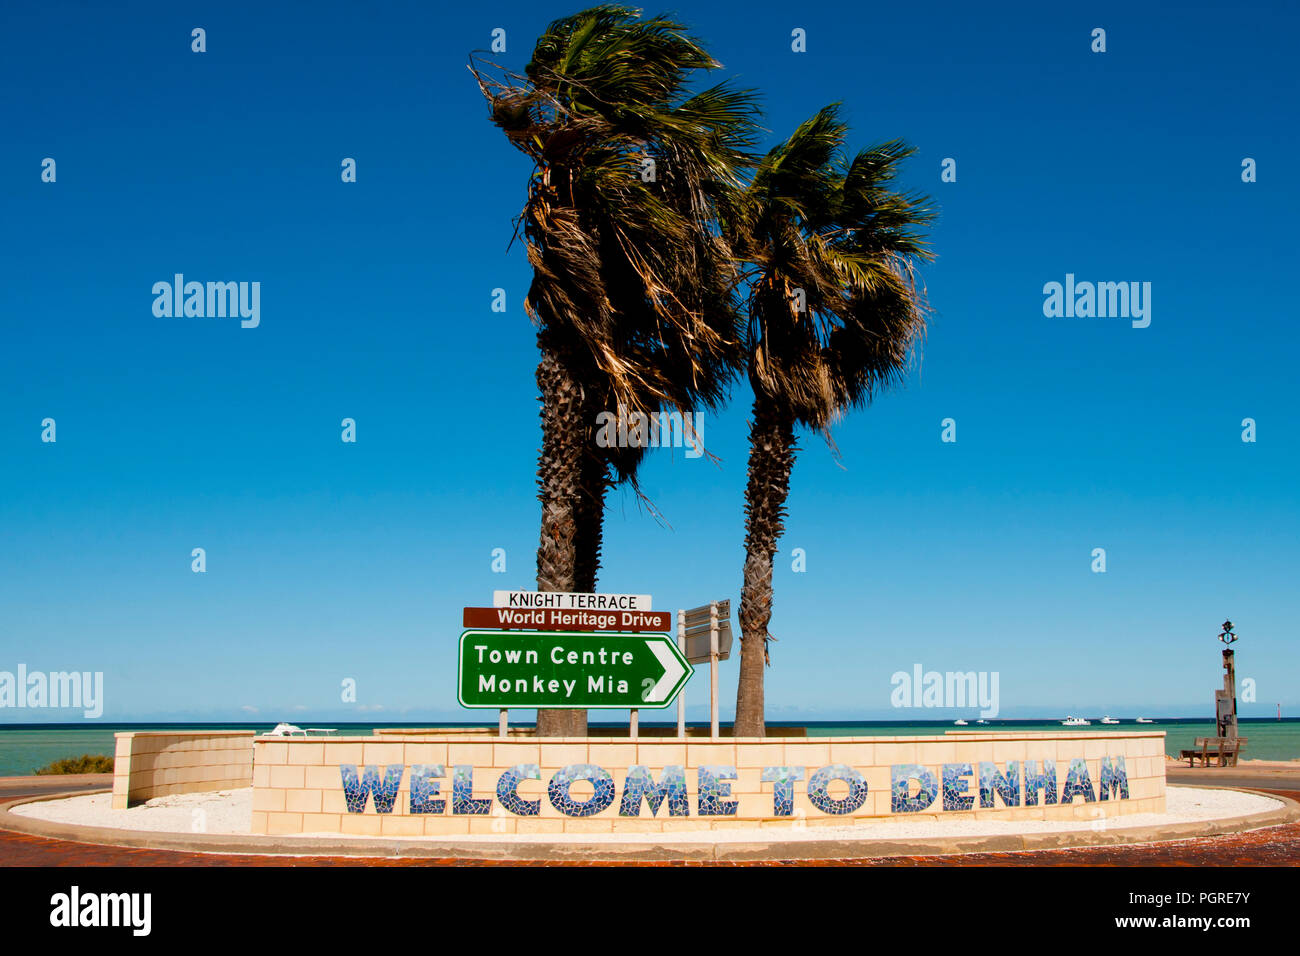 Denham Town Sign - Western Australia Stock Photo